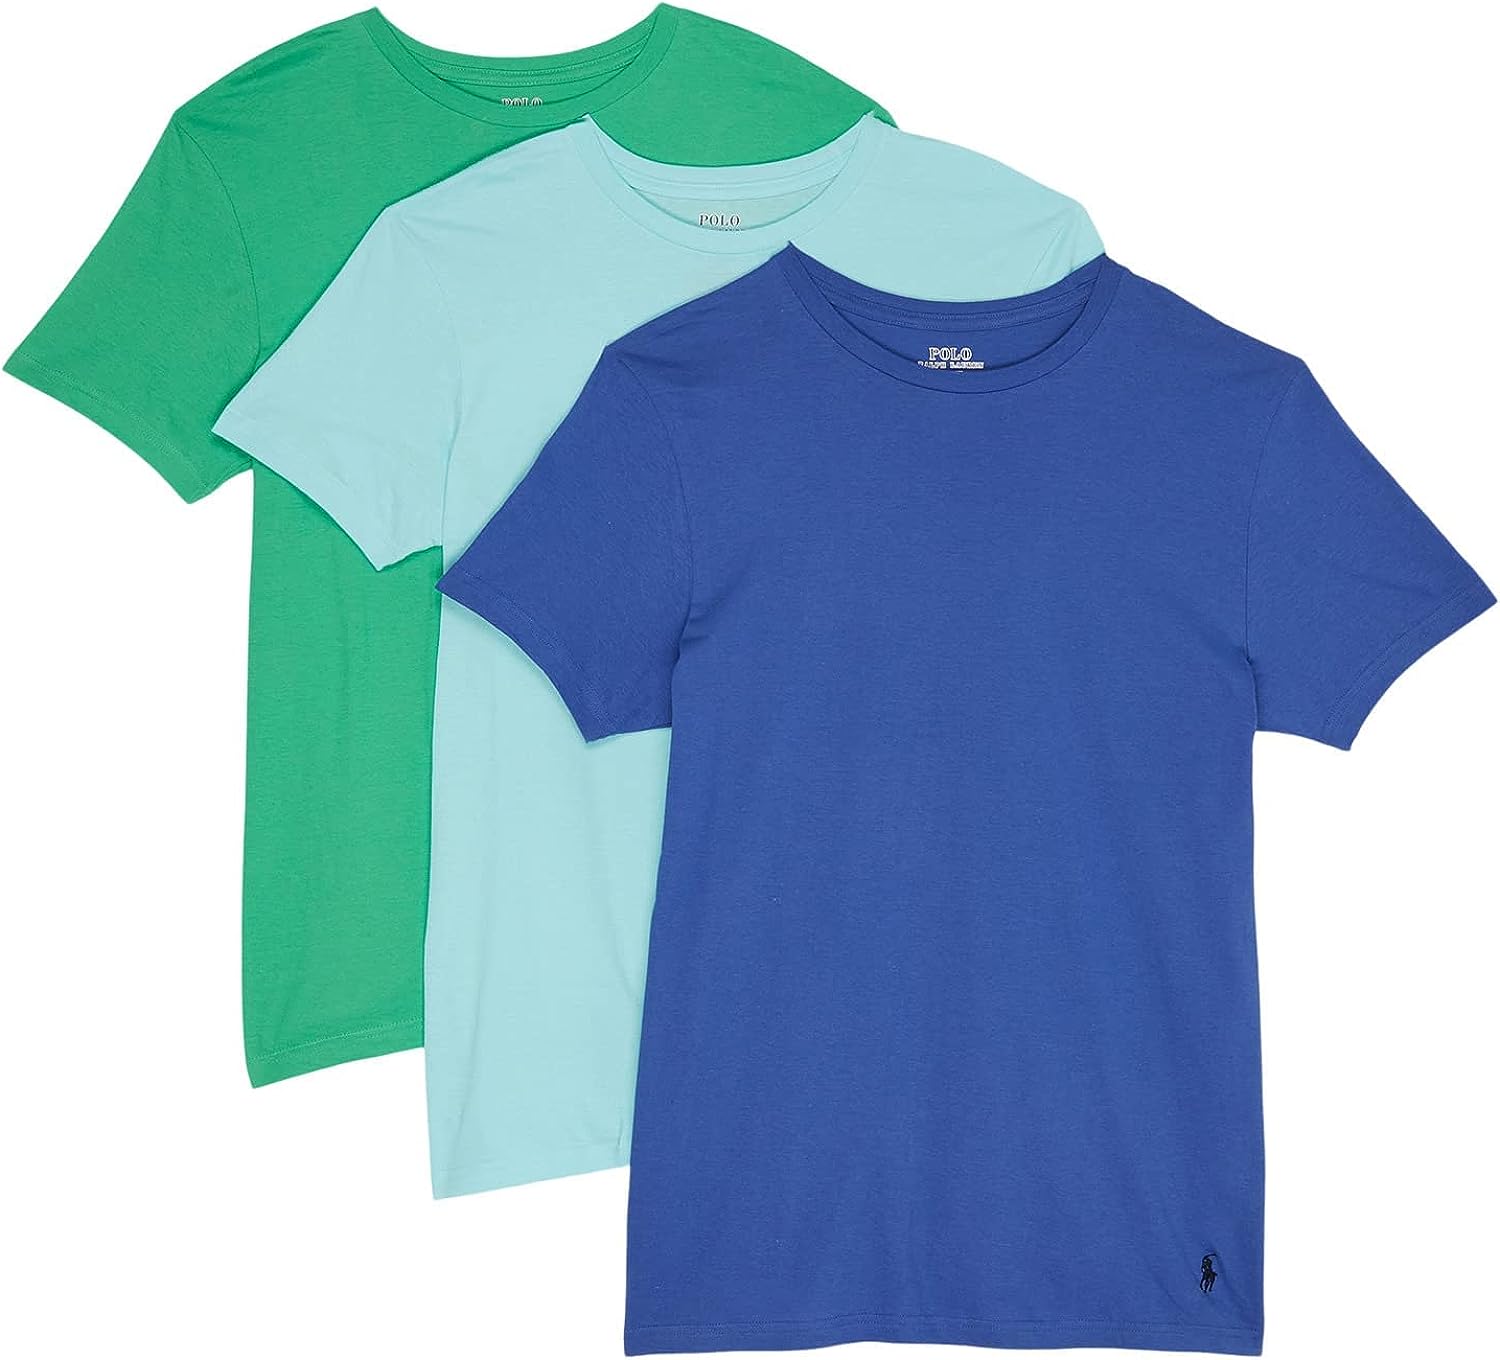 men's Louis Vuitton POLO shirts-LV2806N  Wholesale shirts, Polo shirt  outfits, Shirts